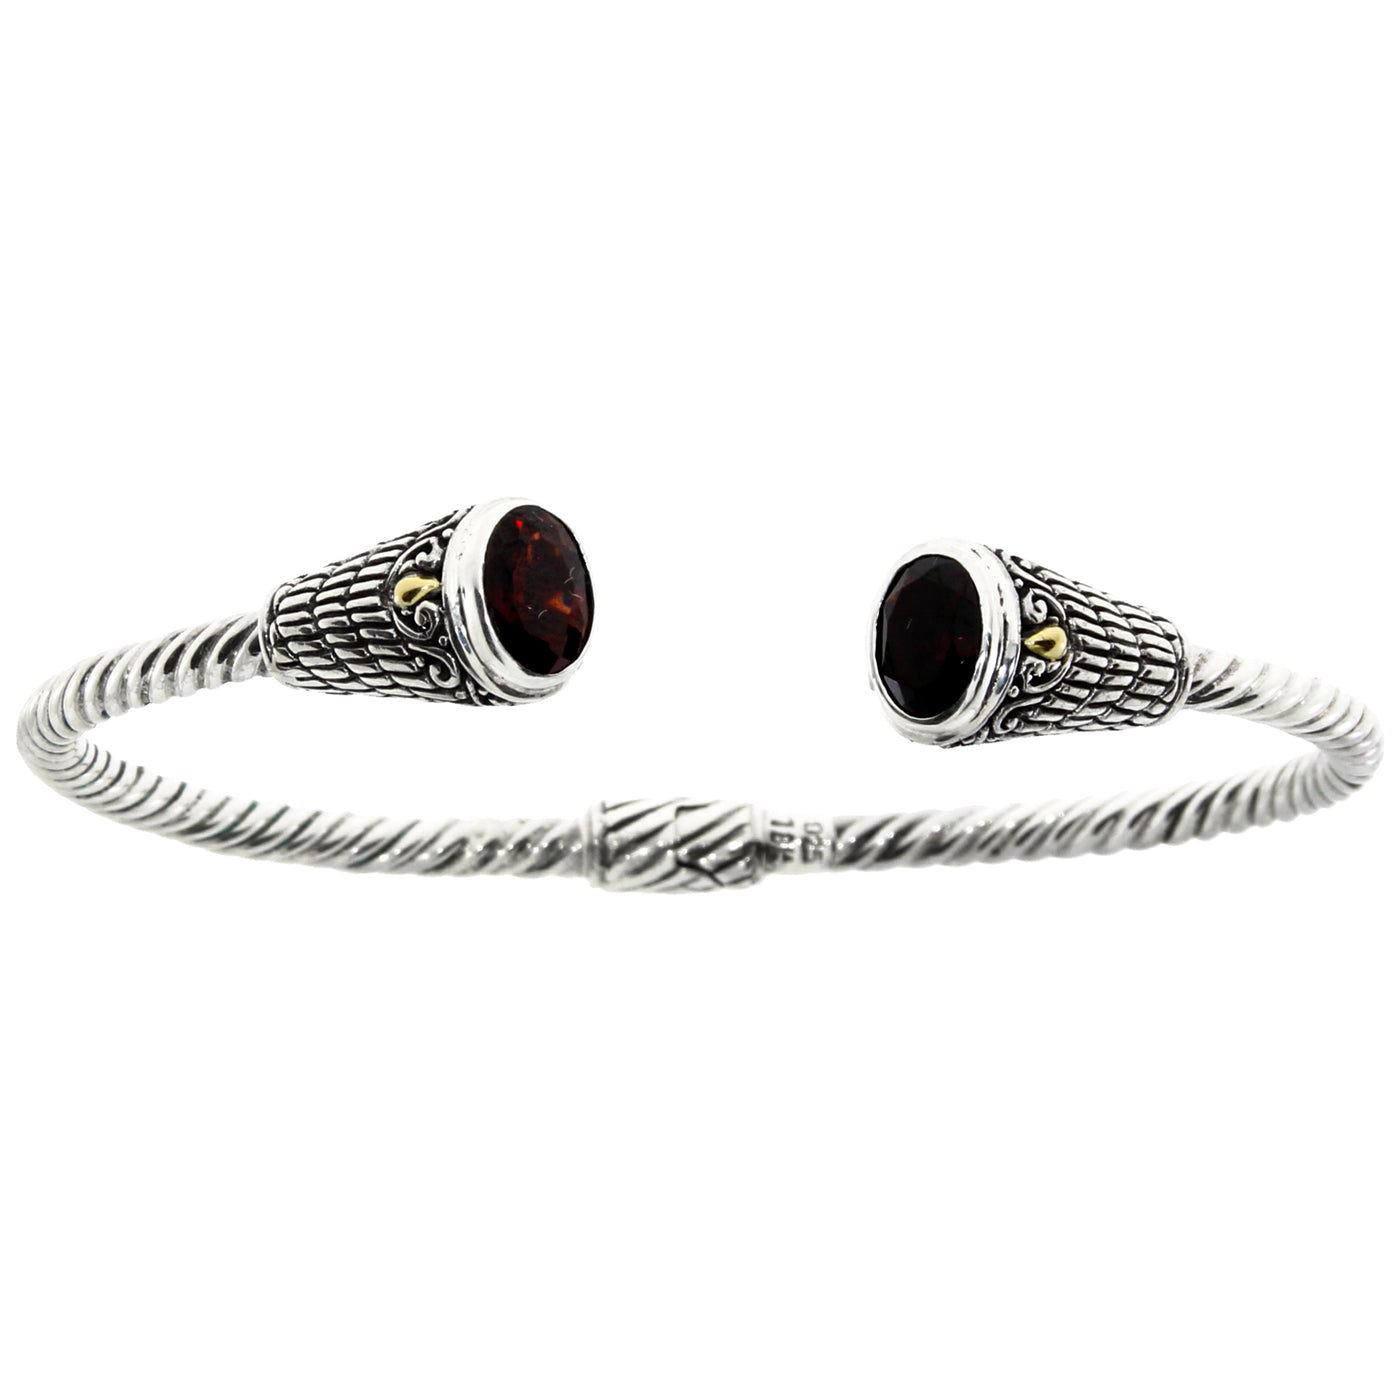 Garnet-Twisted-Spiral-Cable-18K-Gold-And-925-Sterling-Silver-Vintage-Bali-Rose-Cuff-Bracelet